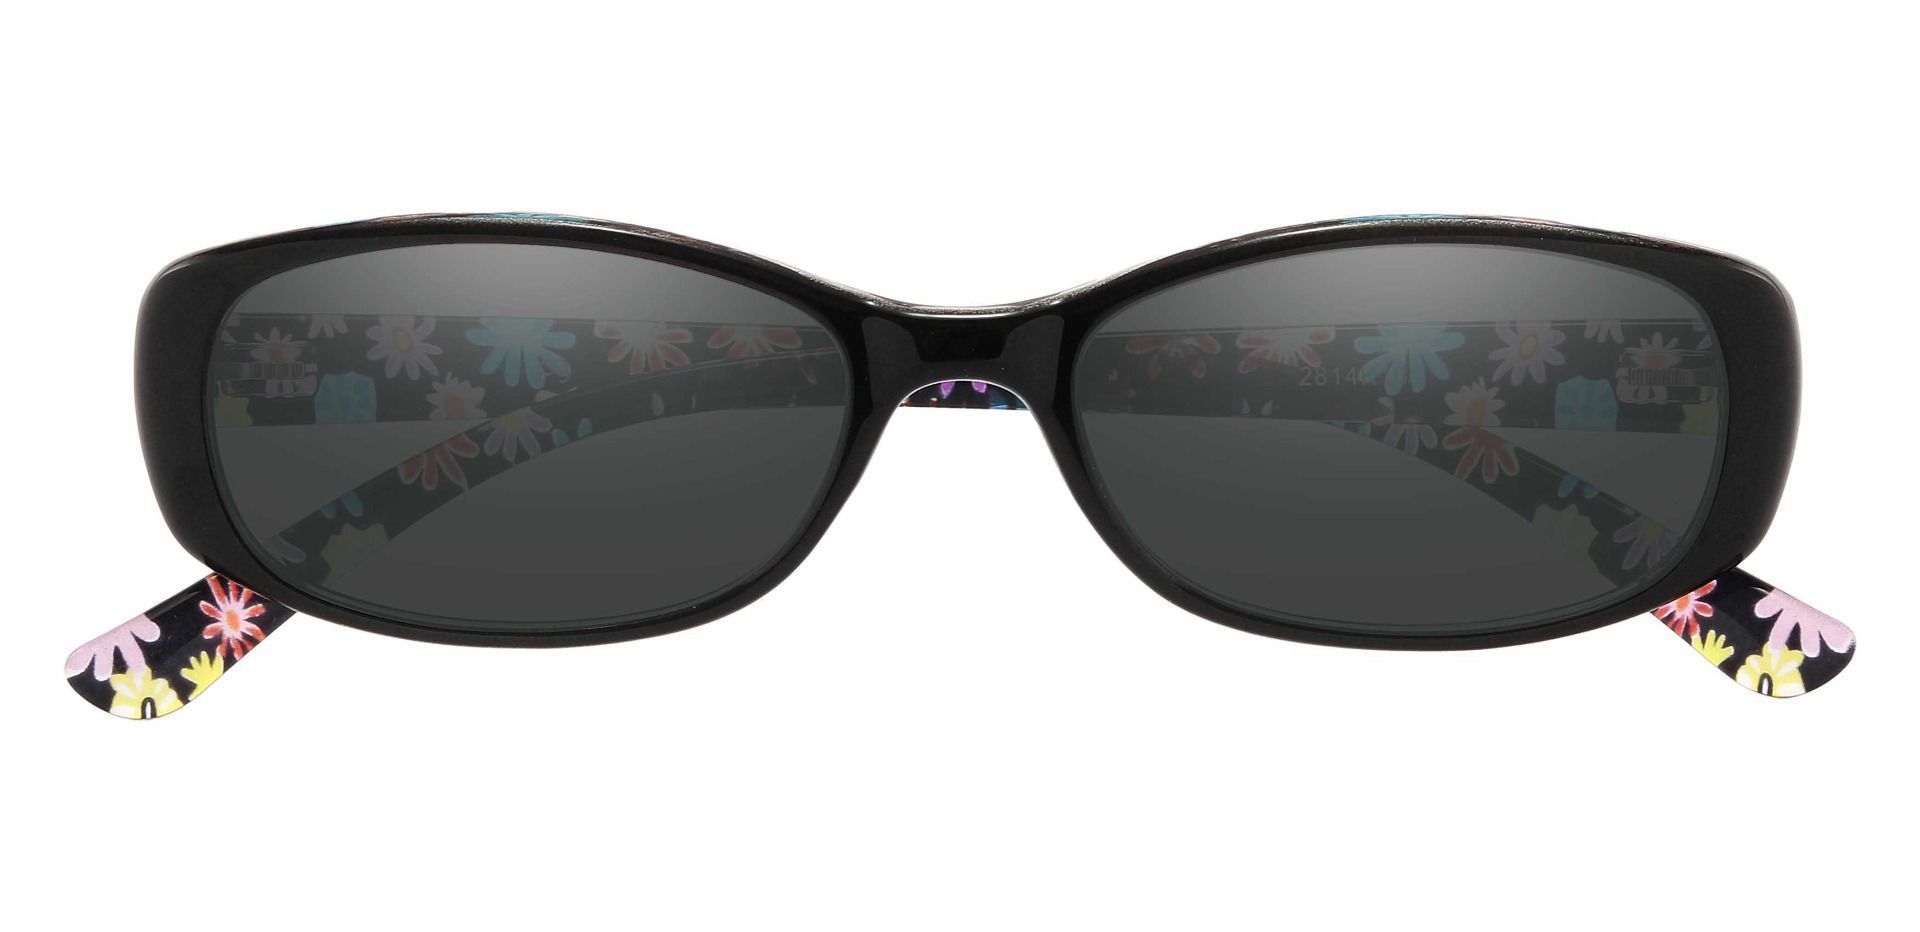 Bethesda Rectangle Progressive Sunglasses - Black Frame With Gray Lenses